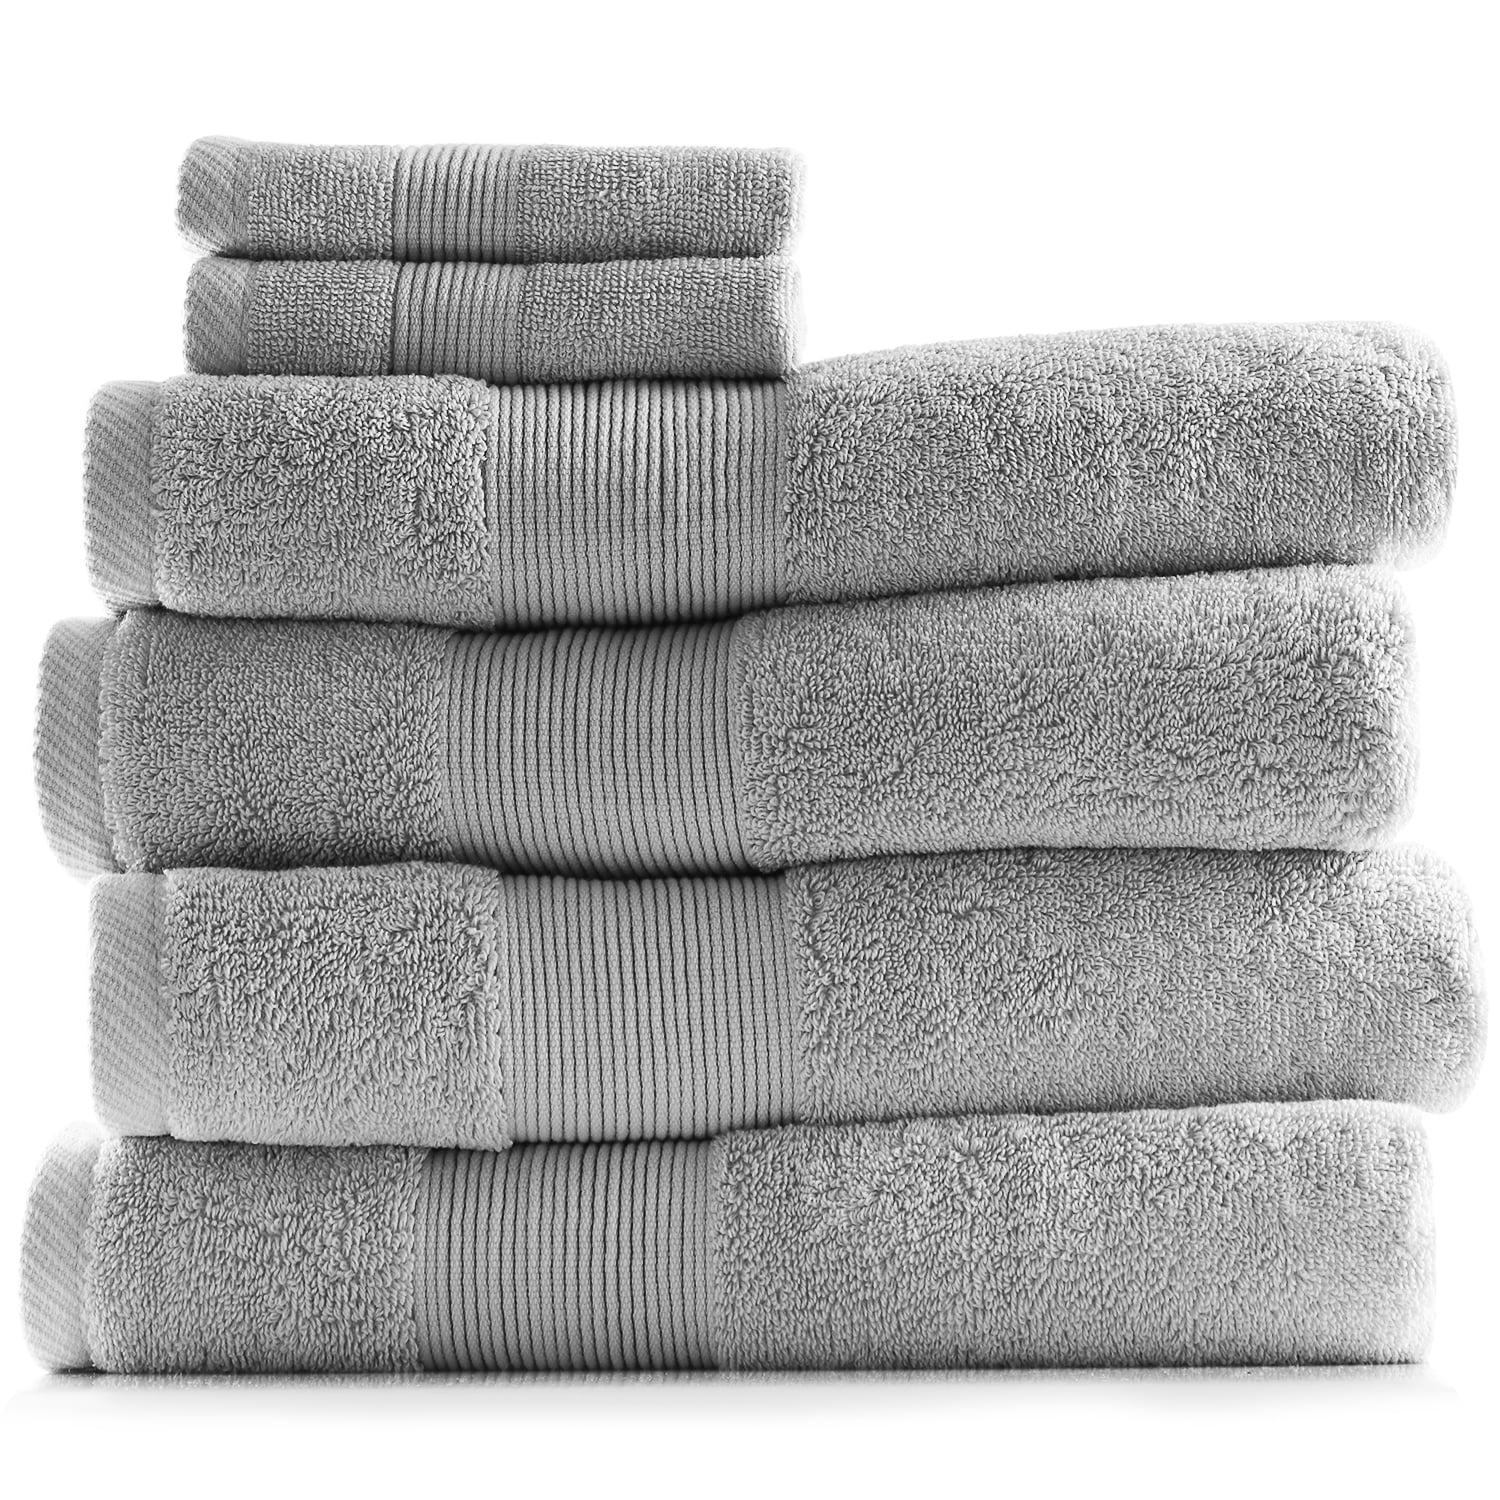 Luxury Cotton Bath Towel Super Soft Face Care Hand Bathroom Cloth Towels Sheet 